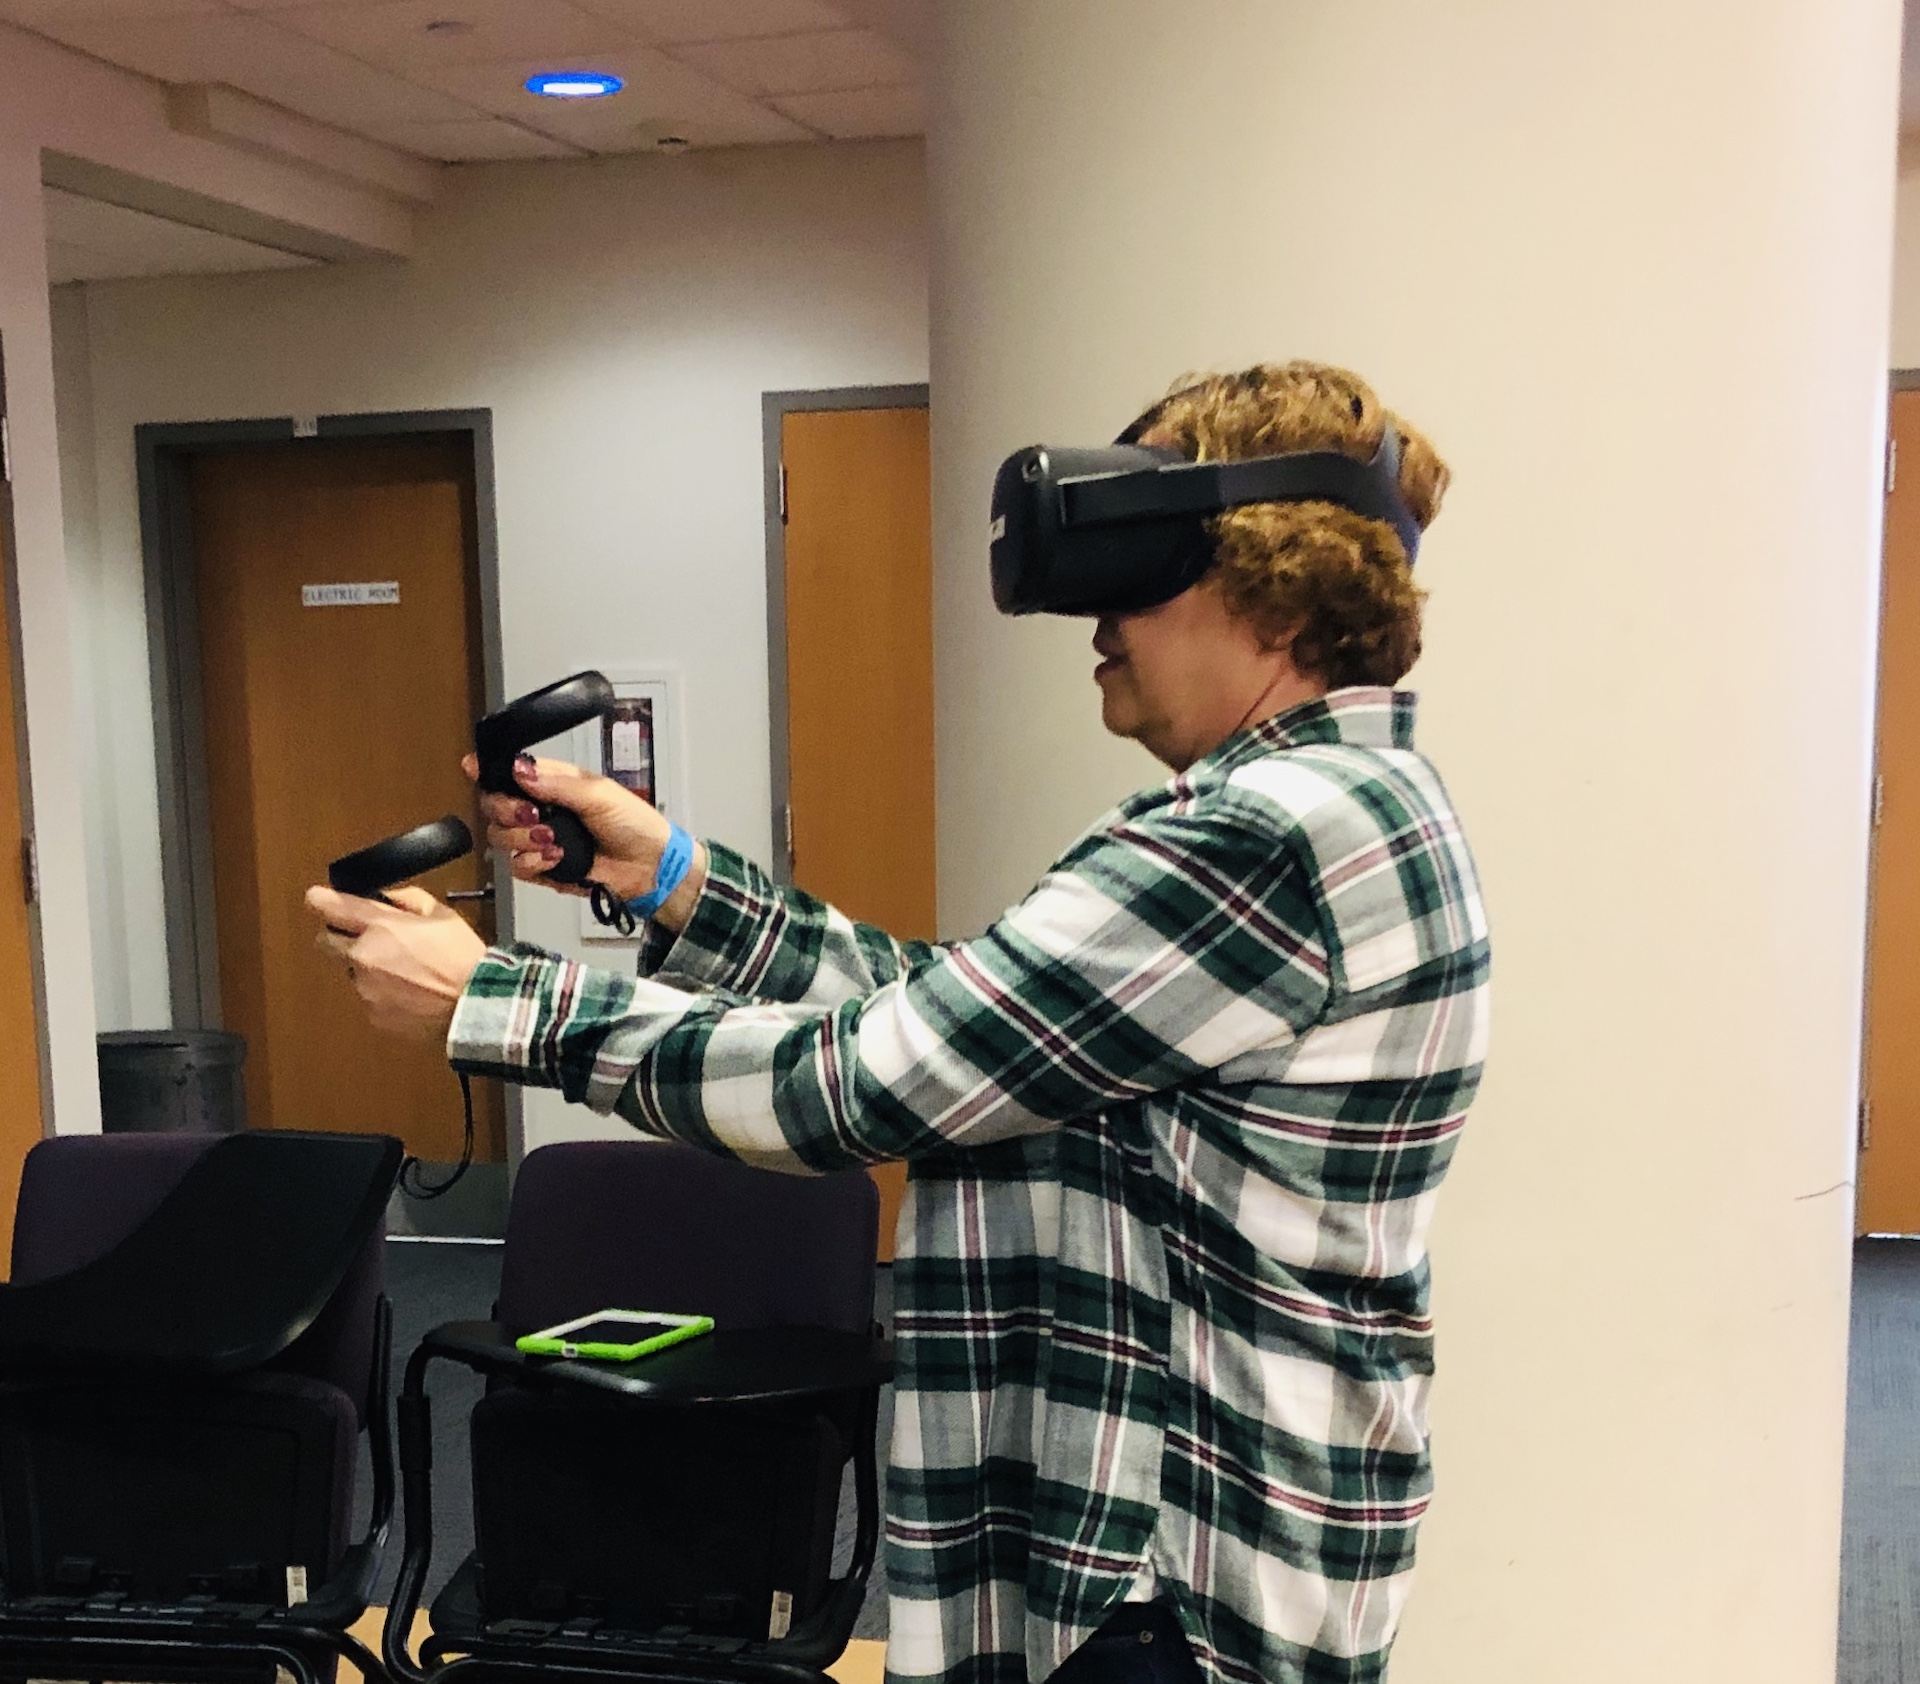 Woman wearing a virtual reality headset